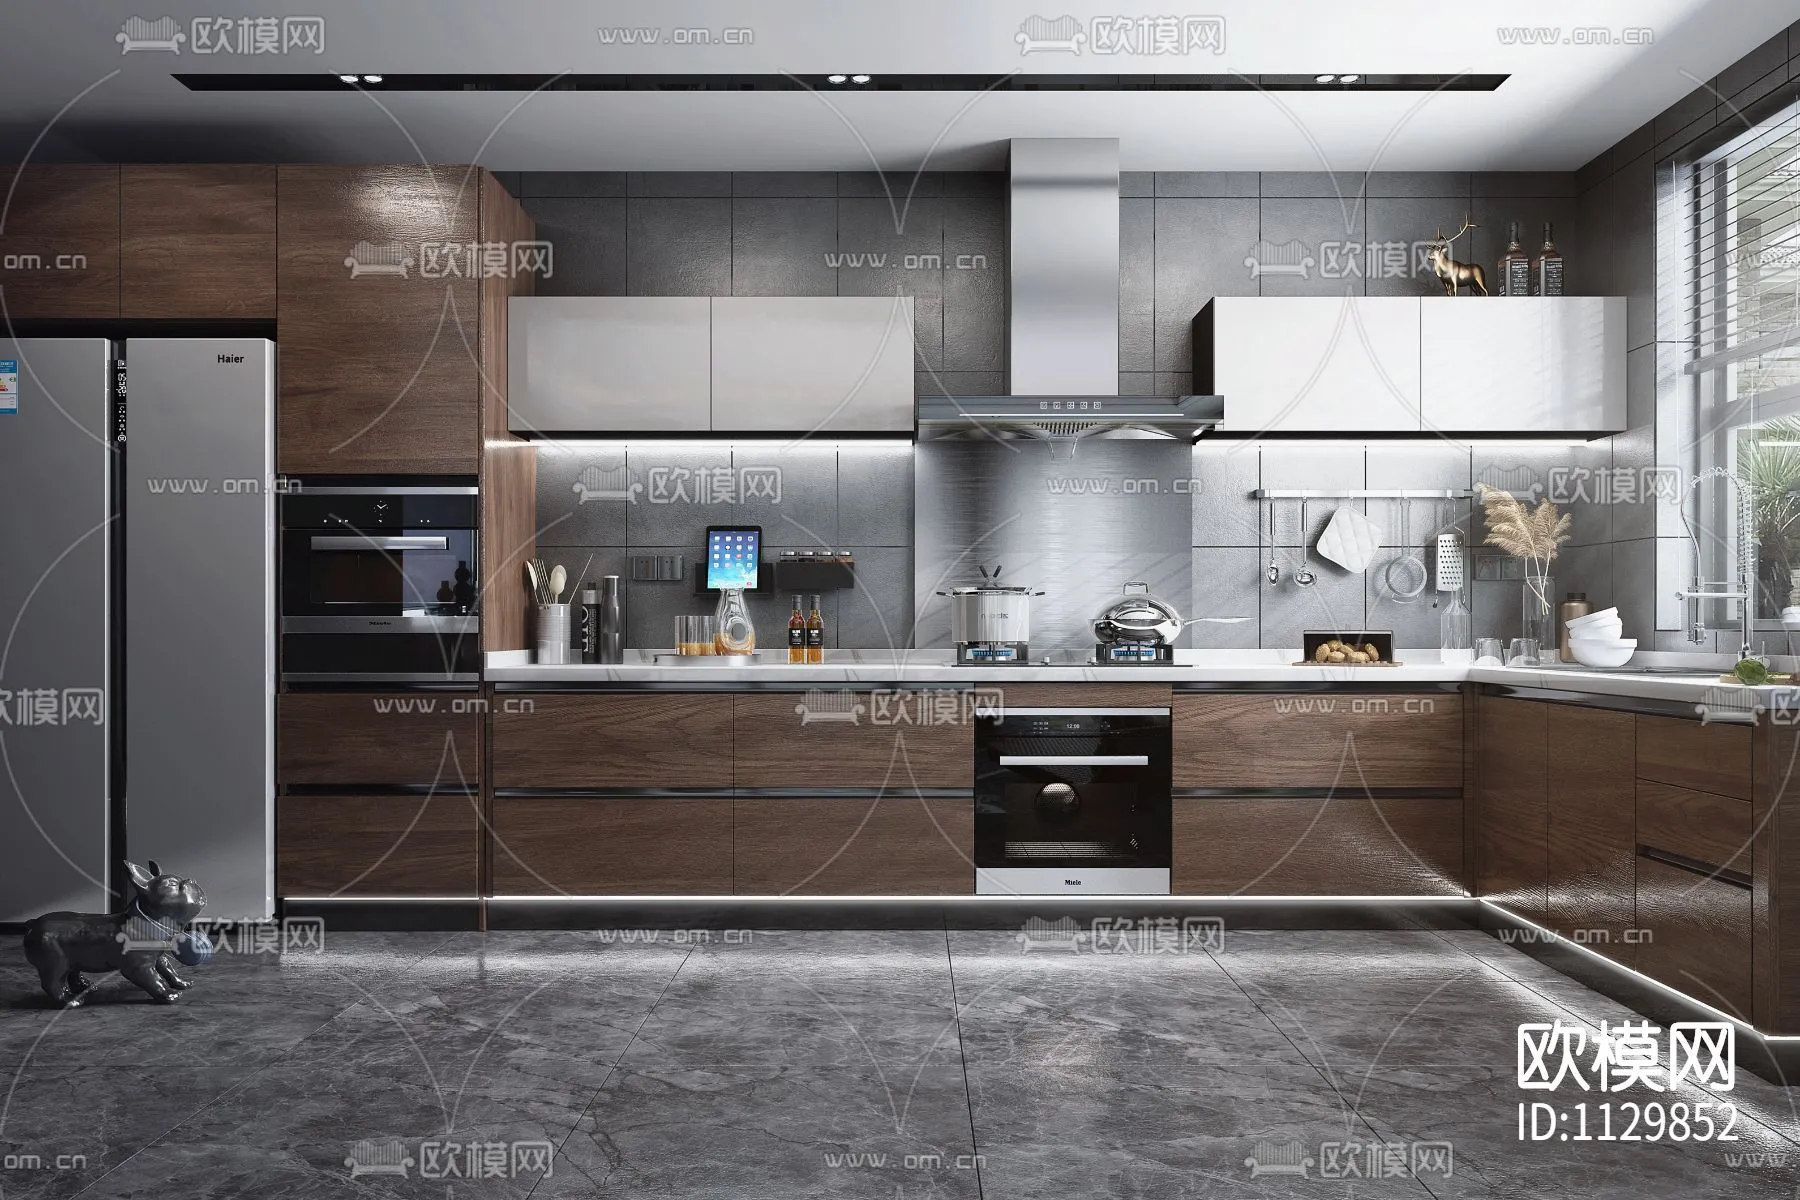 Kitchen 3D Scenes – 0542